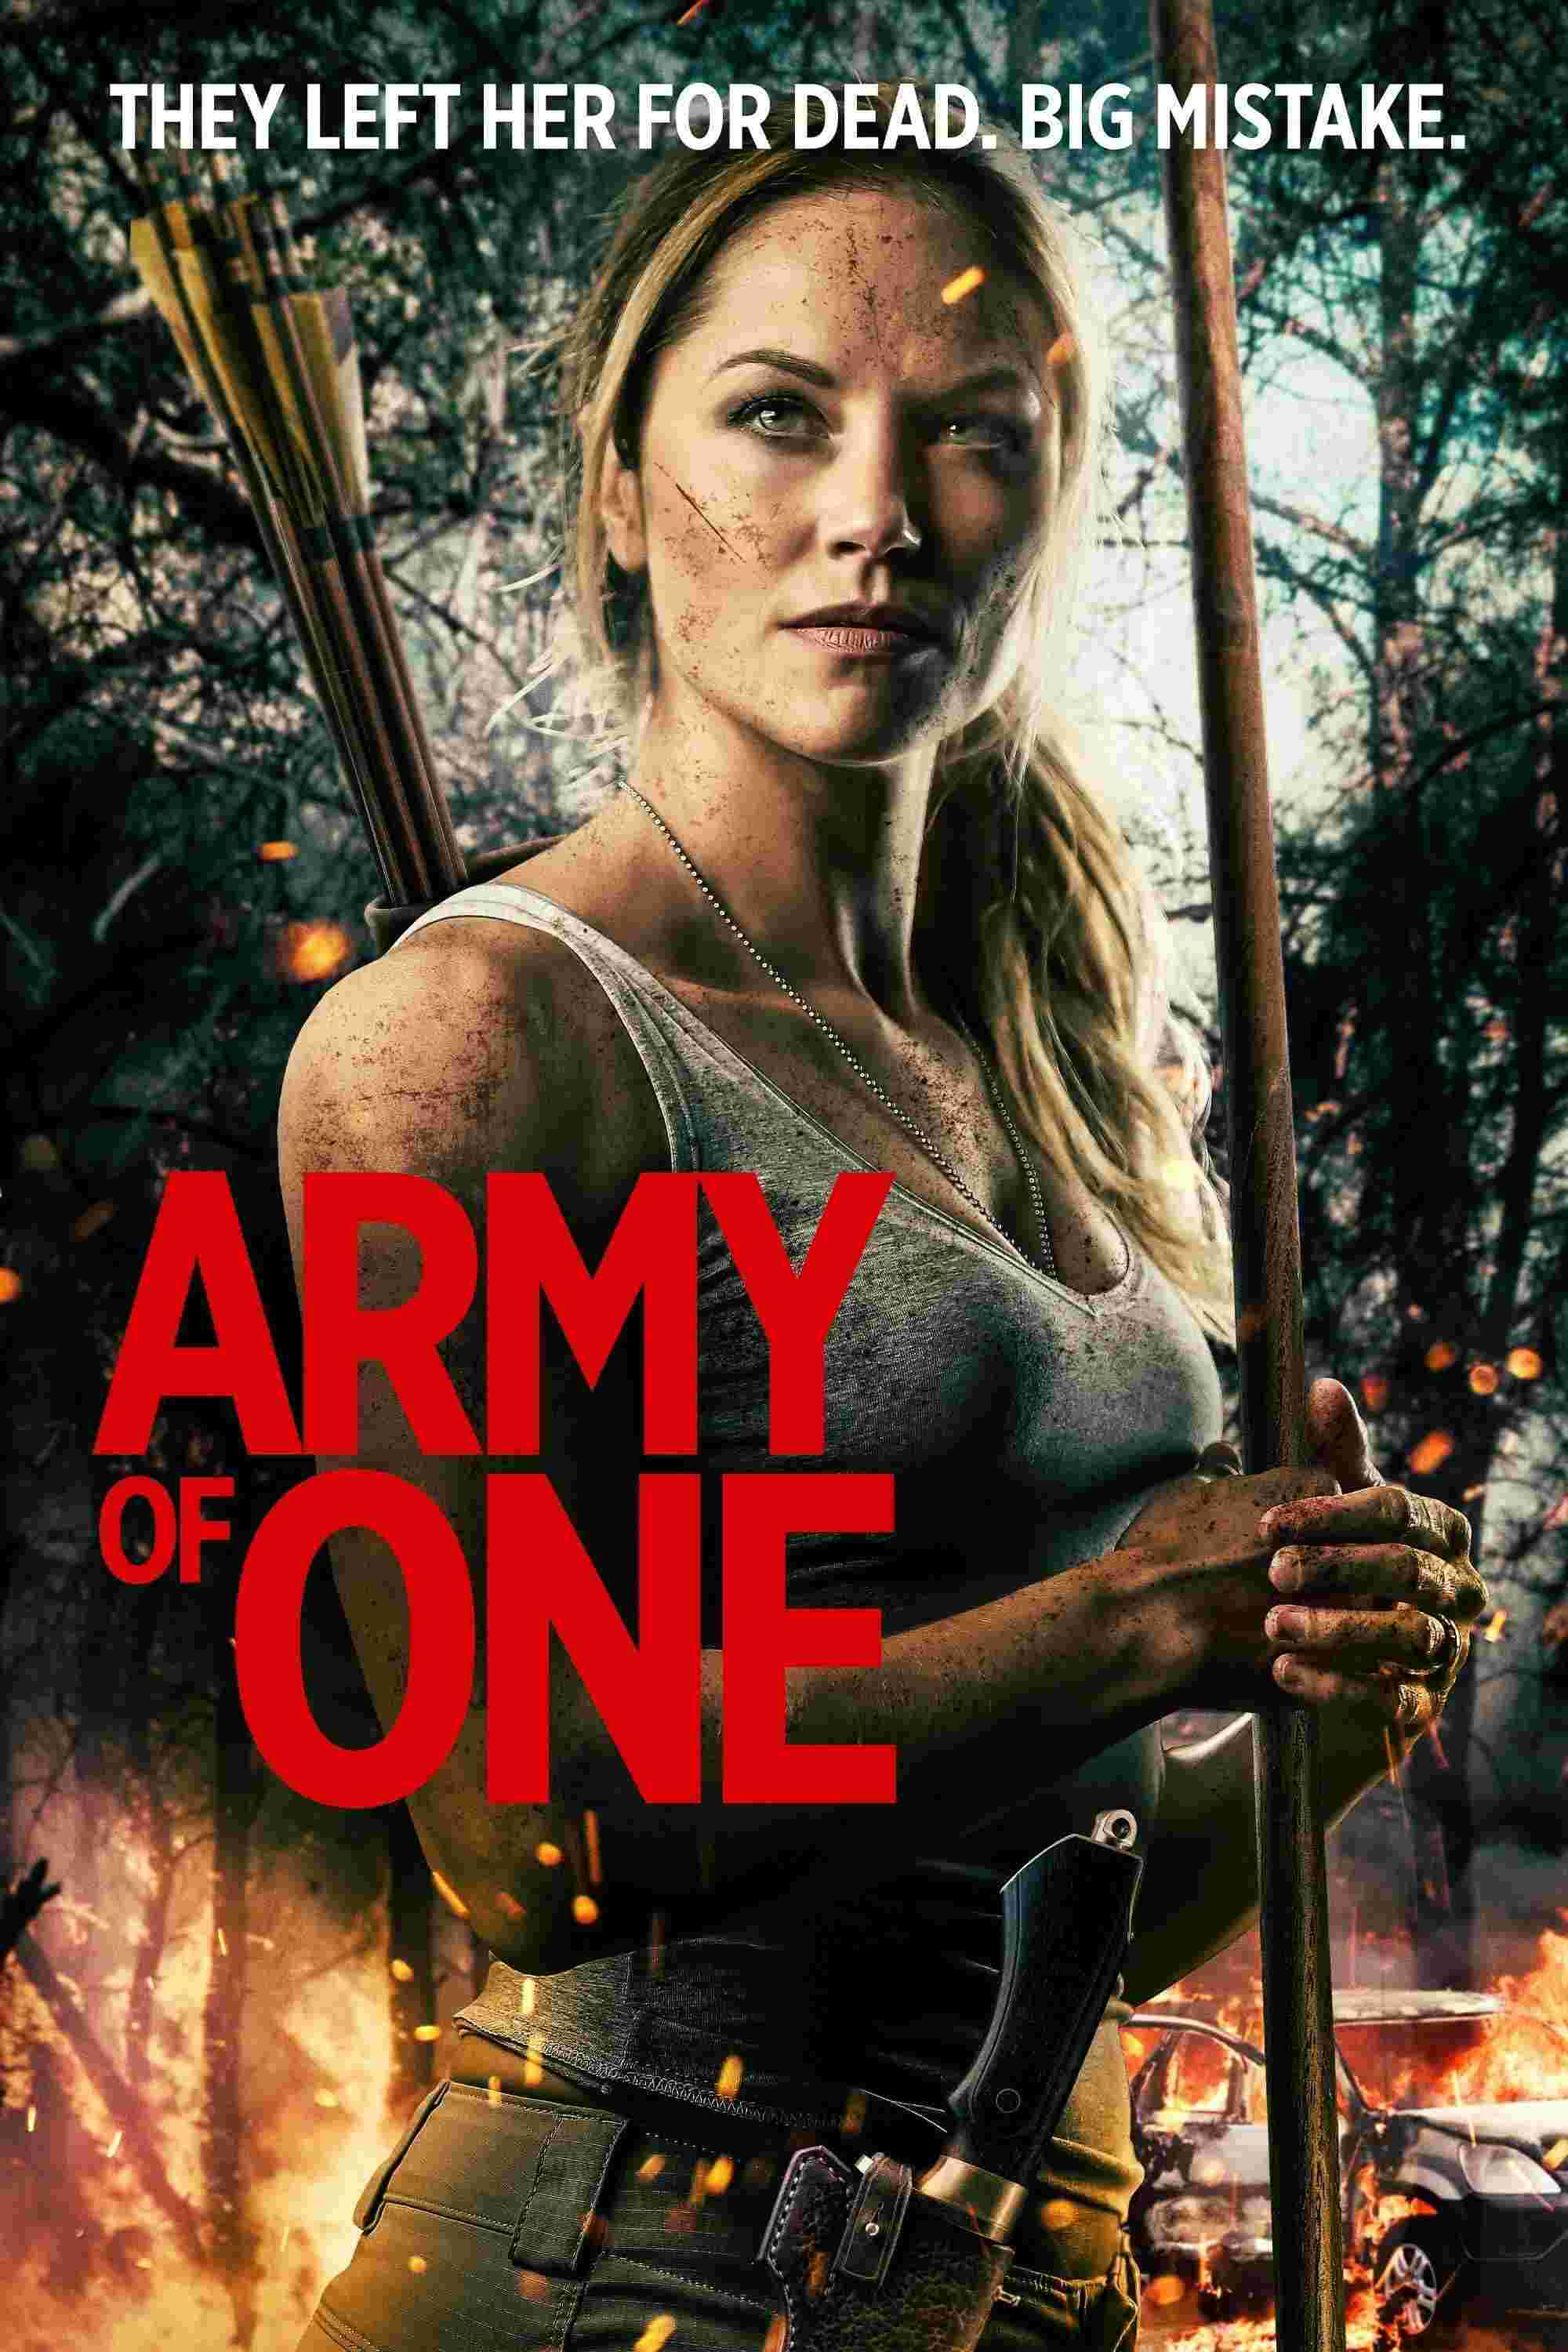 Army of One (2020) Ellen Hollman